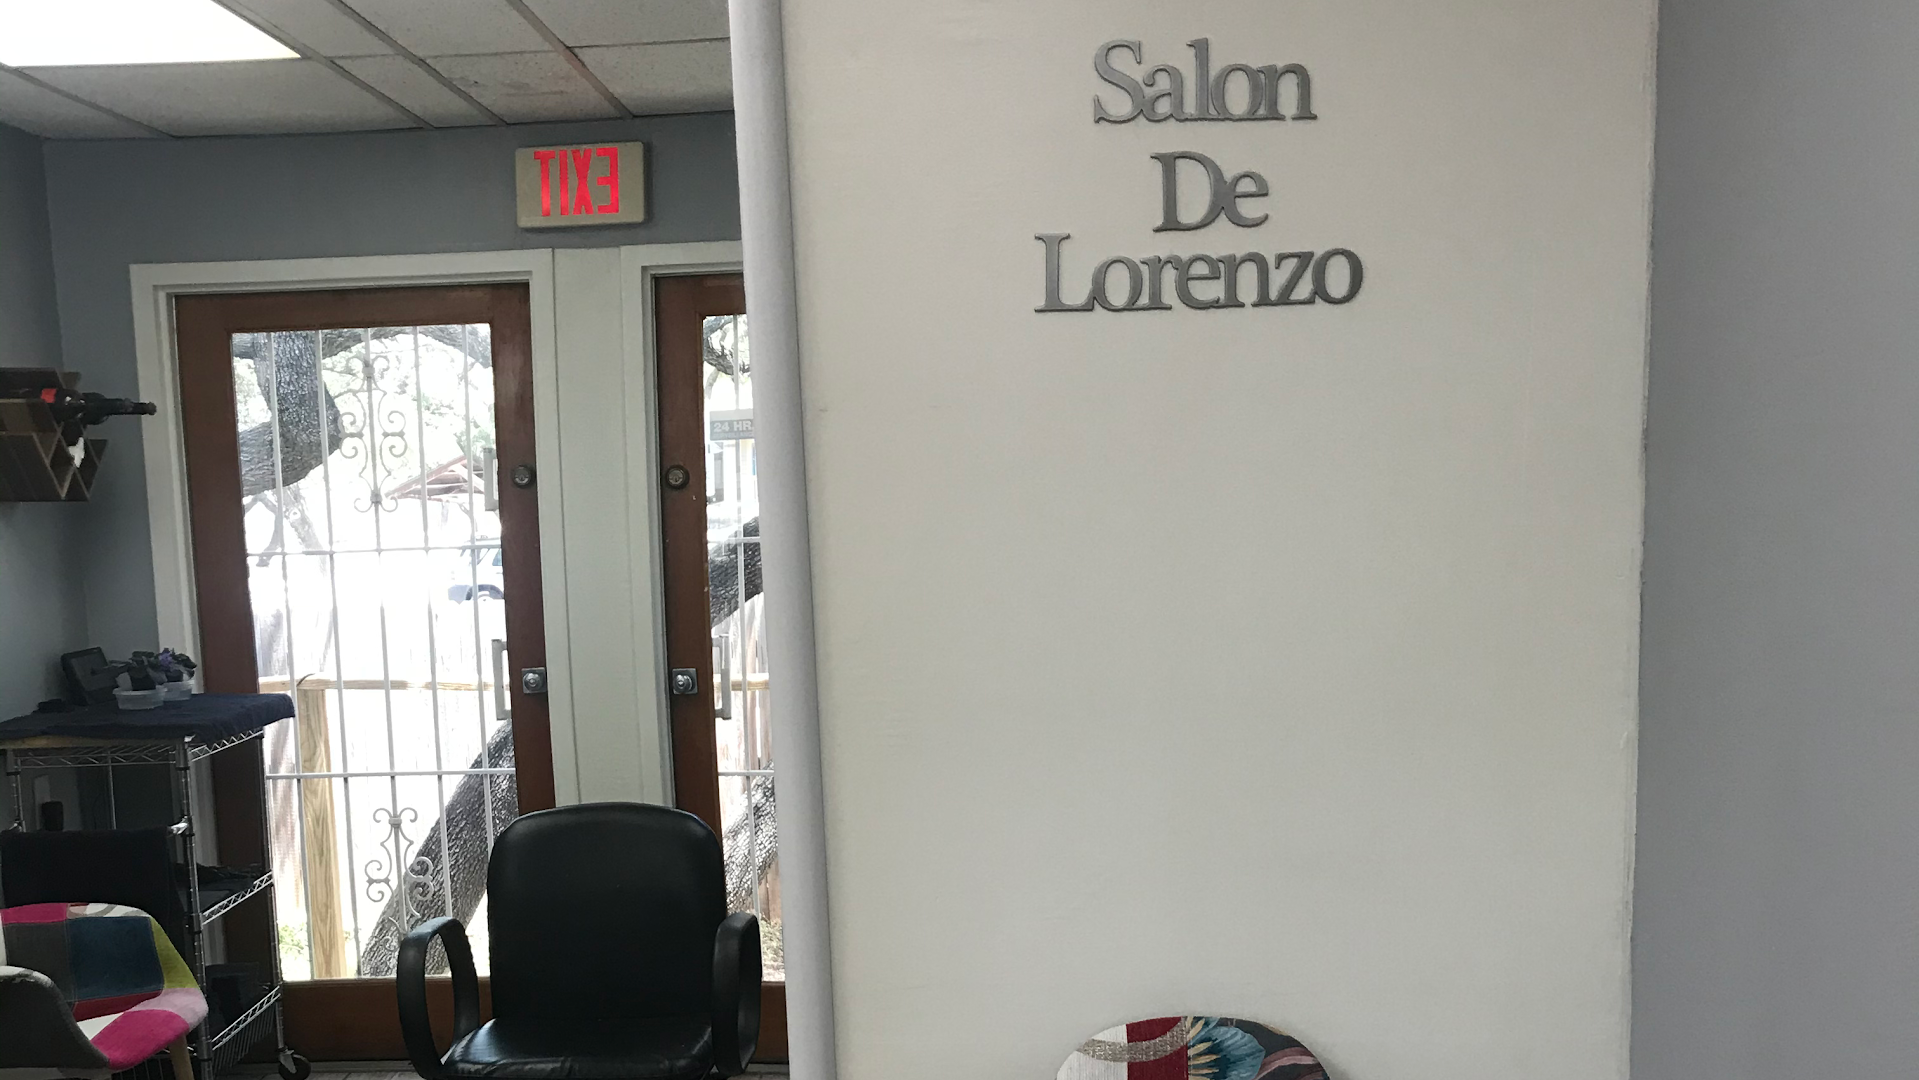 Salon De Lorenzo